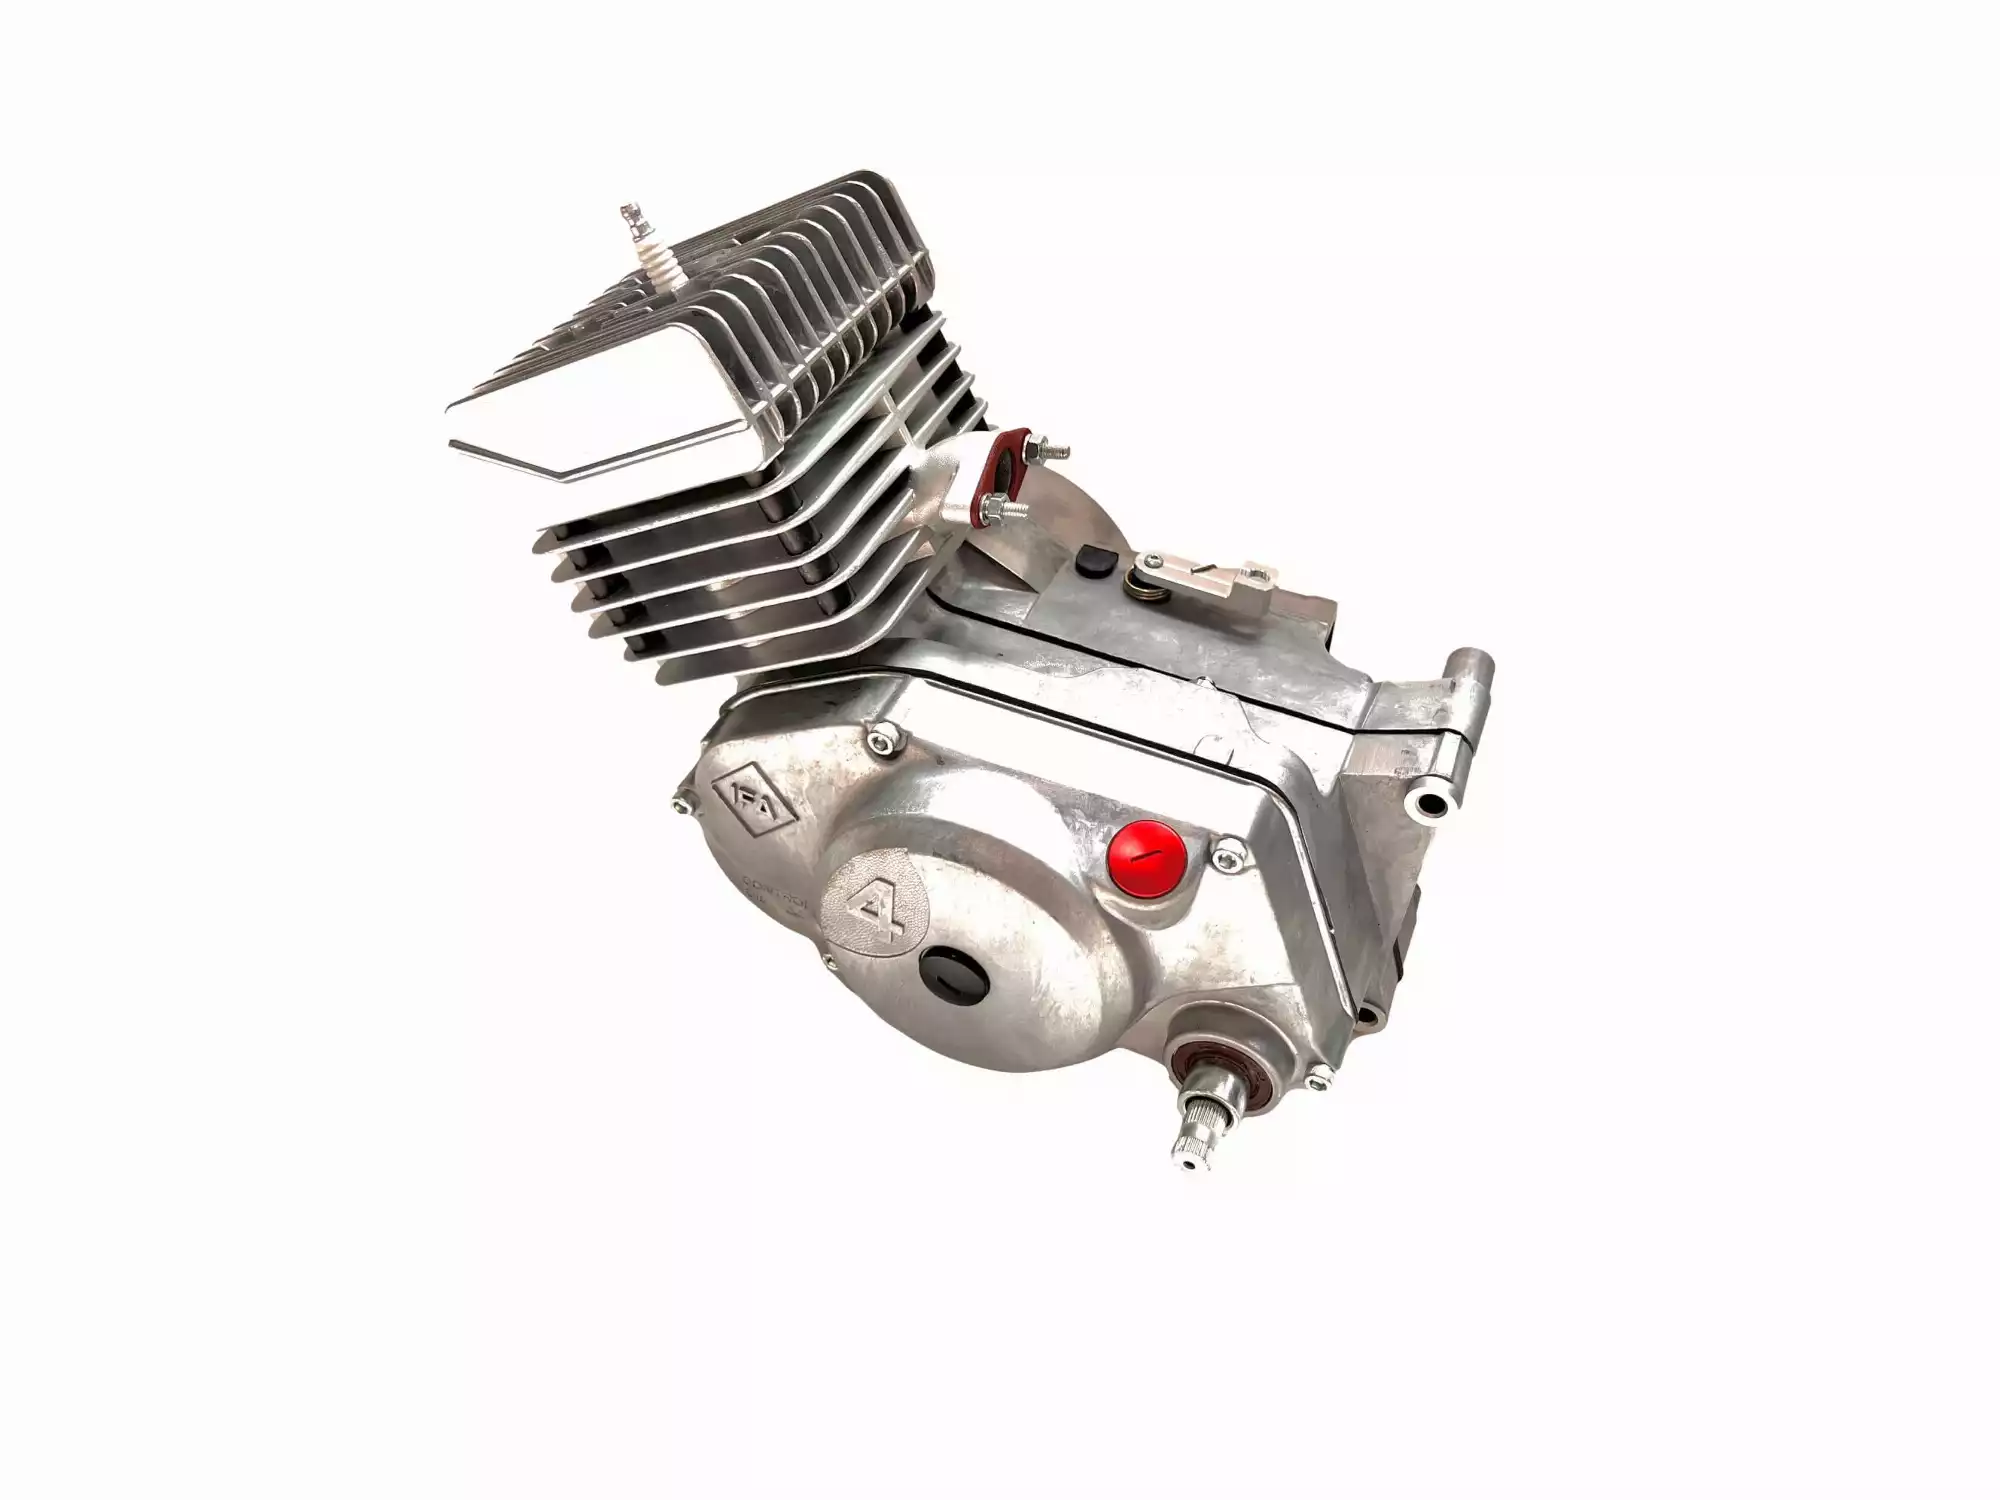 Komplettmotor SM83G Basic